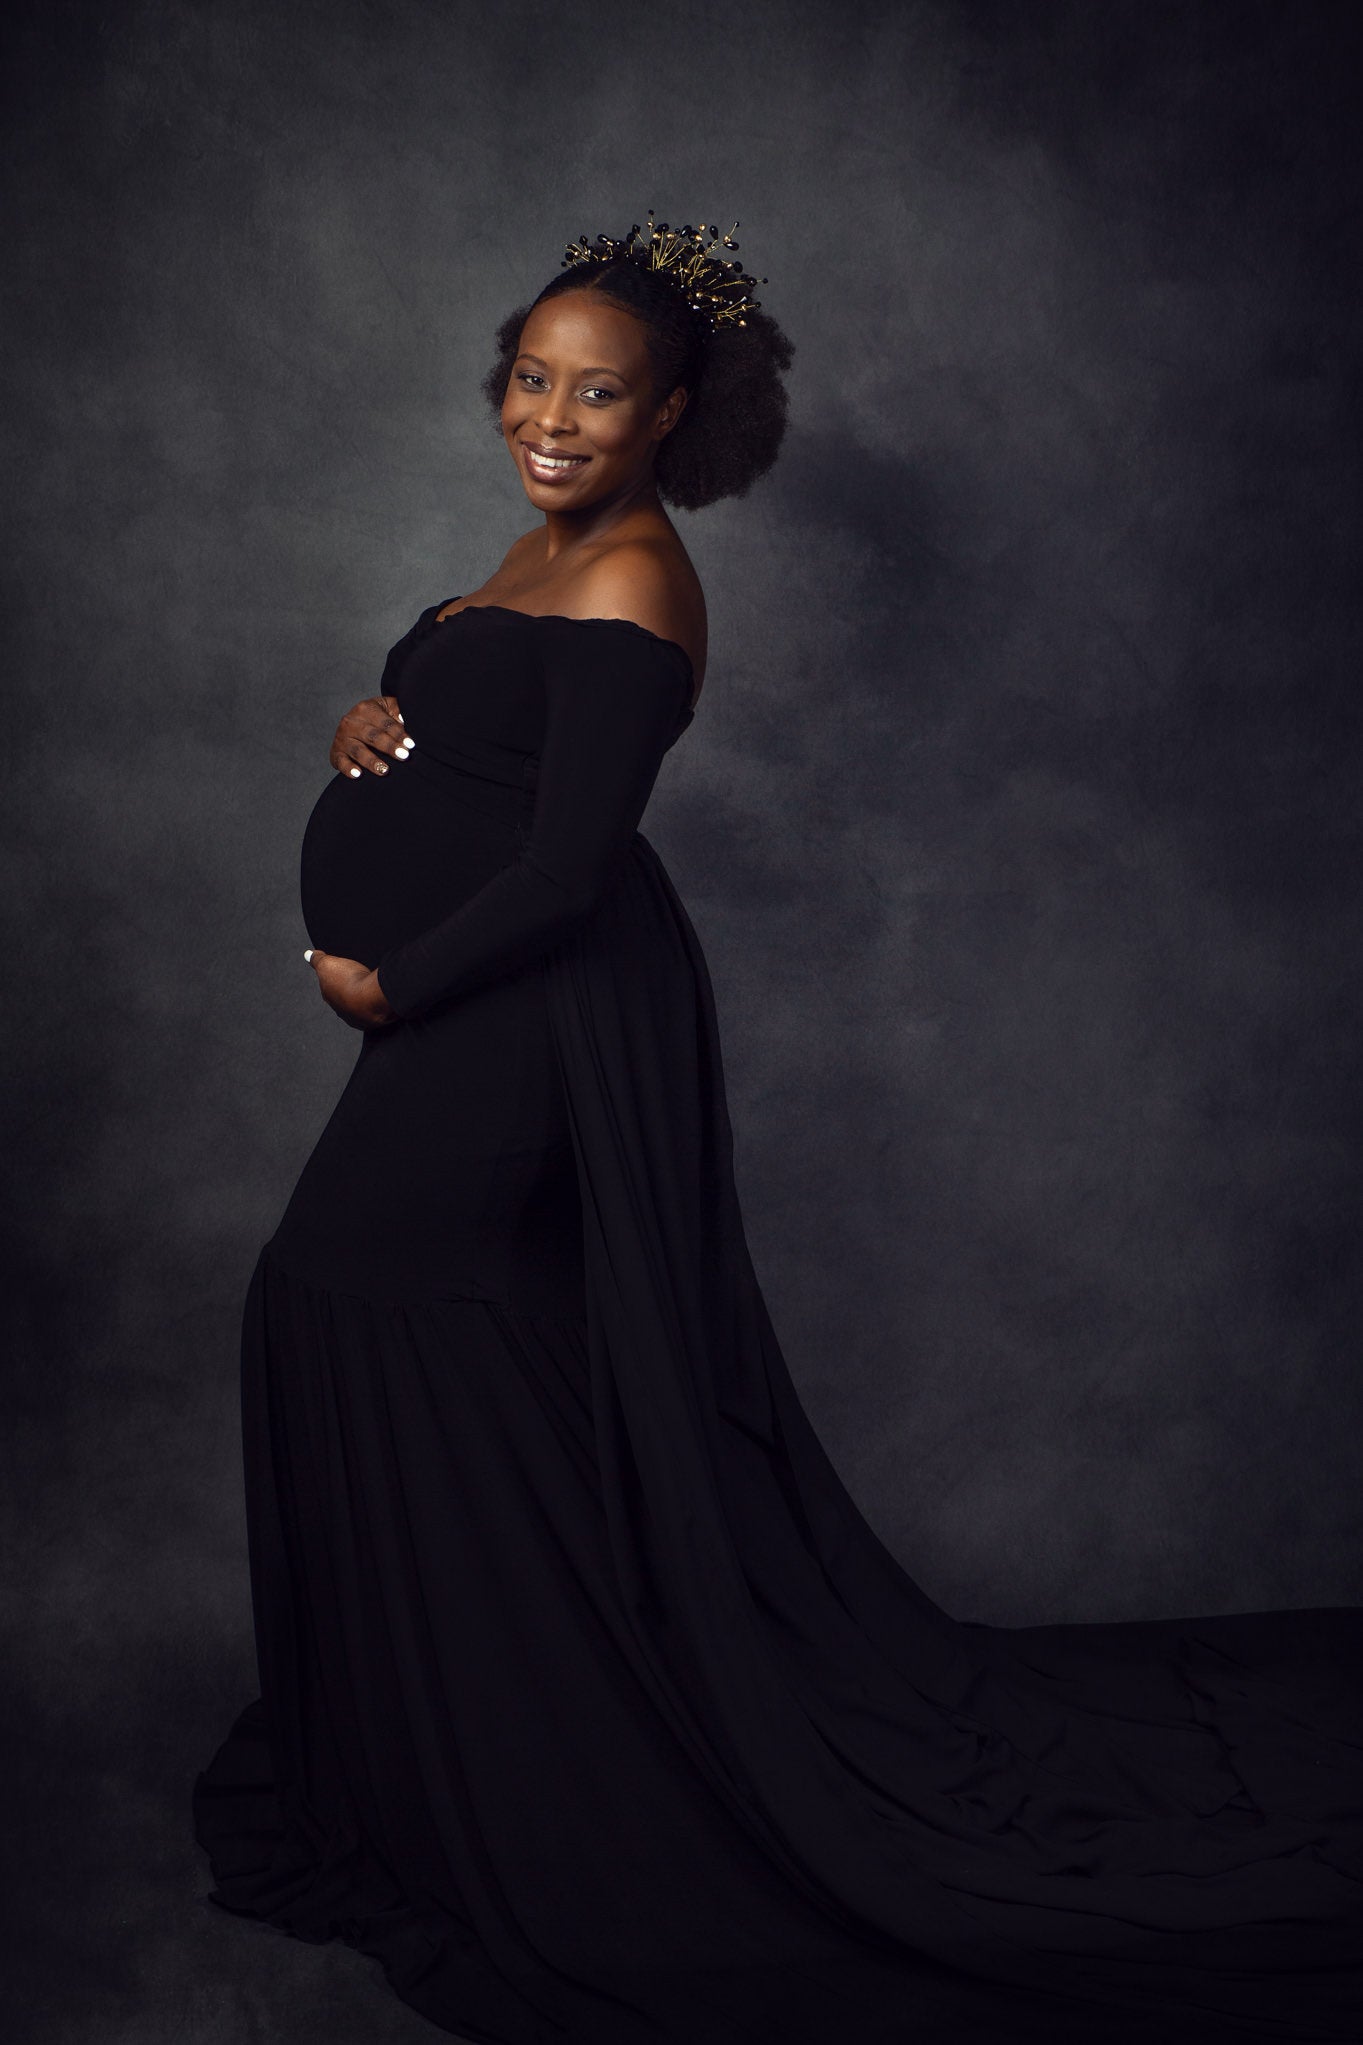 fine art Maternity portrait photographer photography Johannesburg Gauteng South Africa